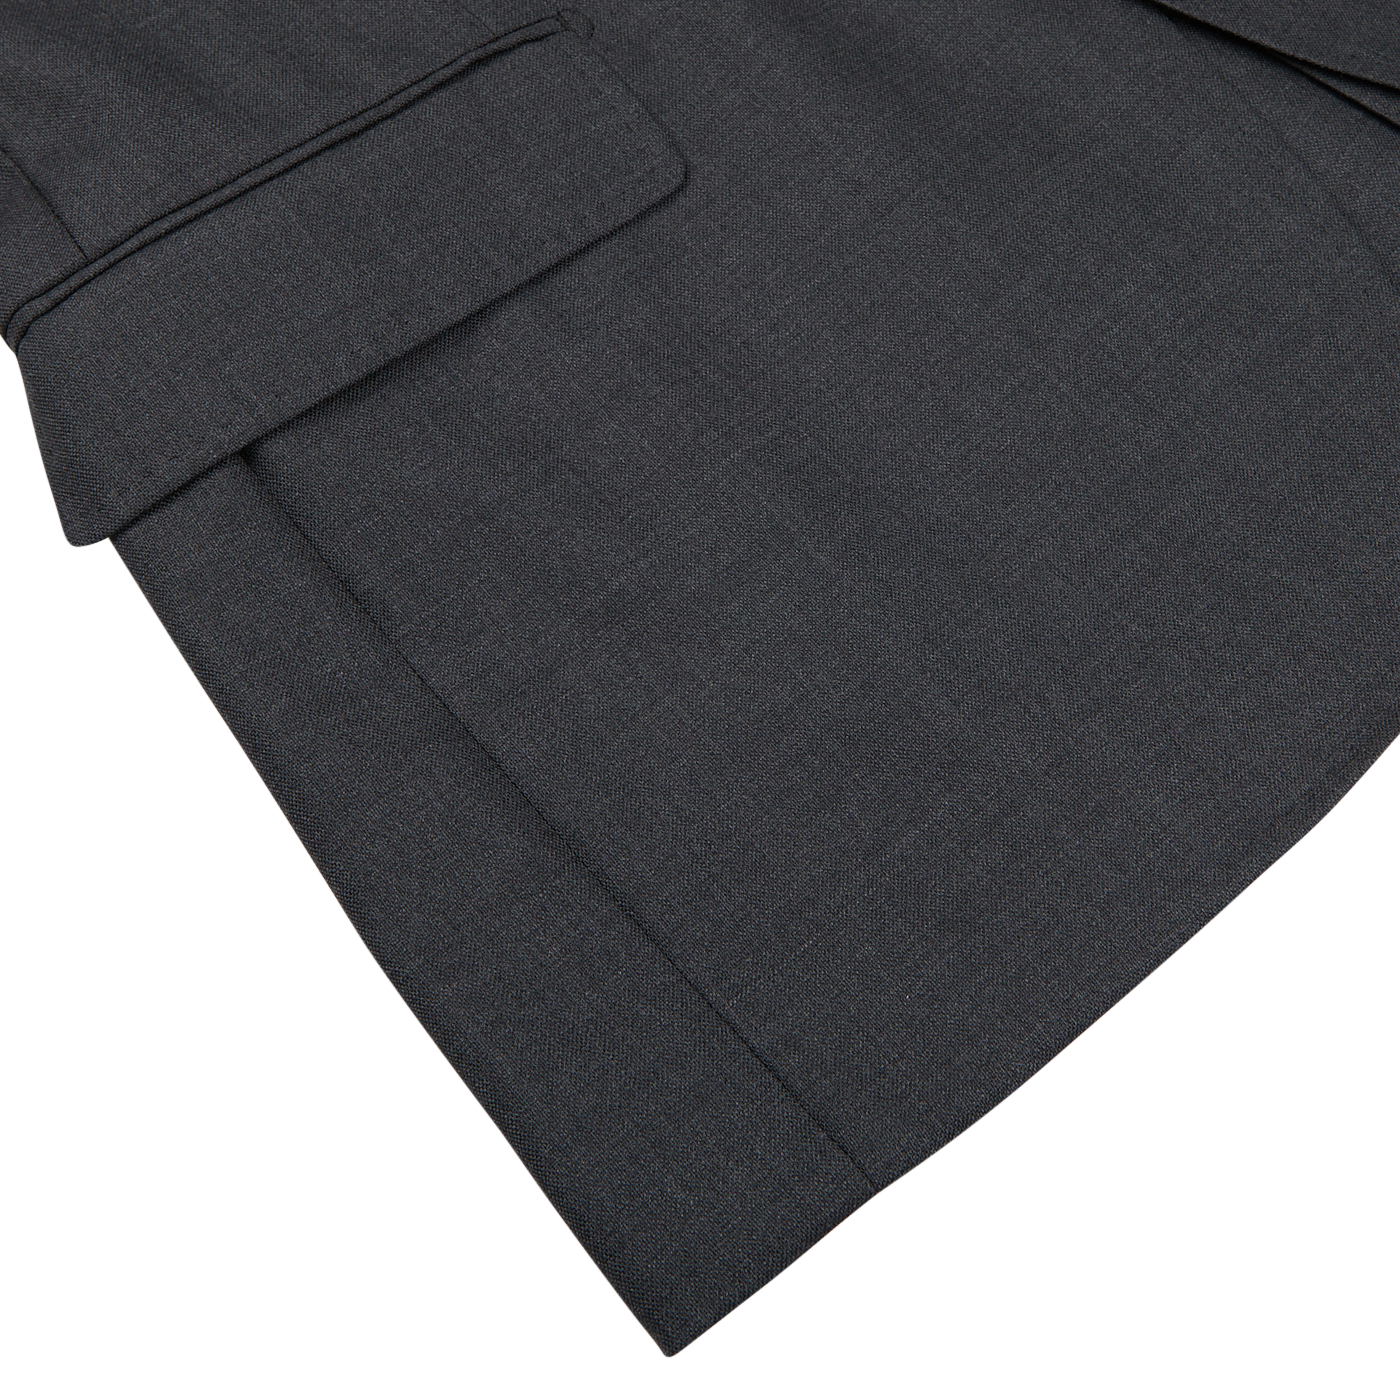 A close up of a Baltzar Sartorial Grey Super 100's Wool Suit Jacket.